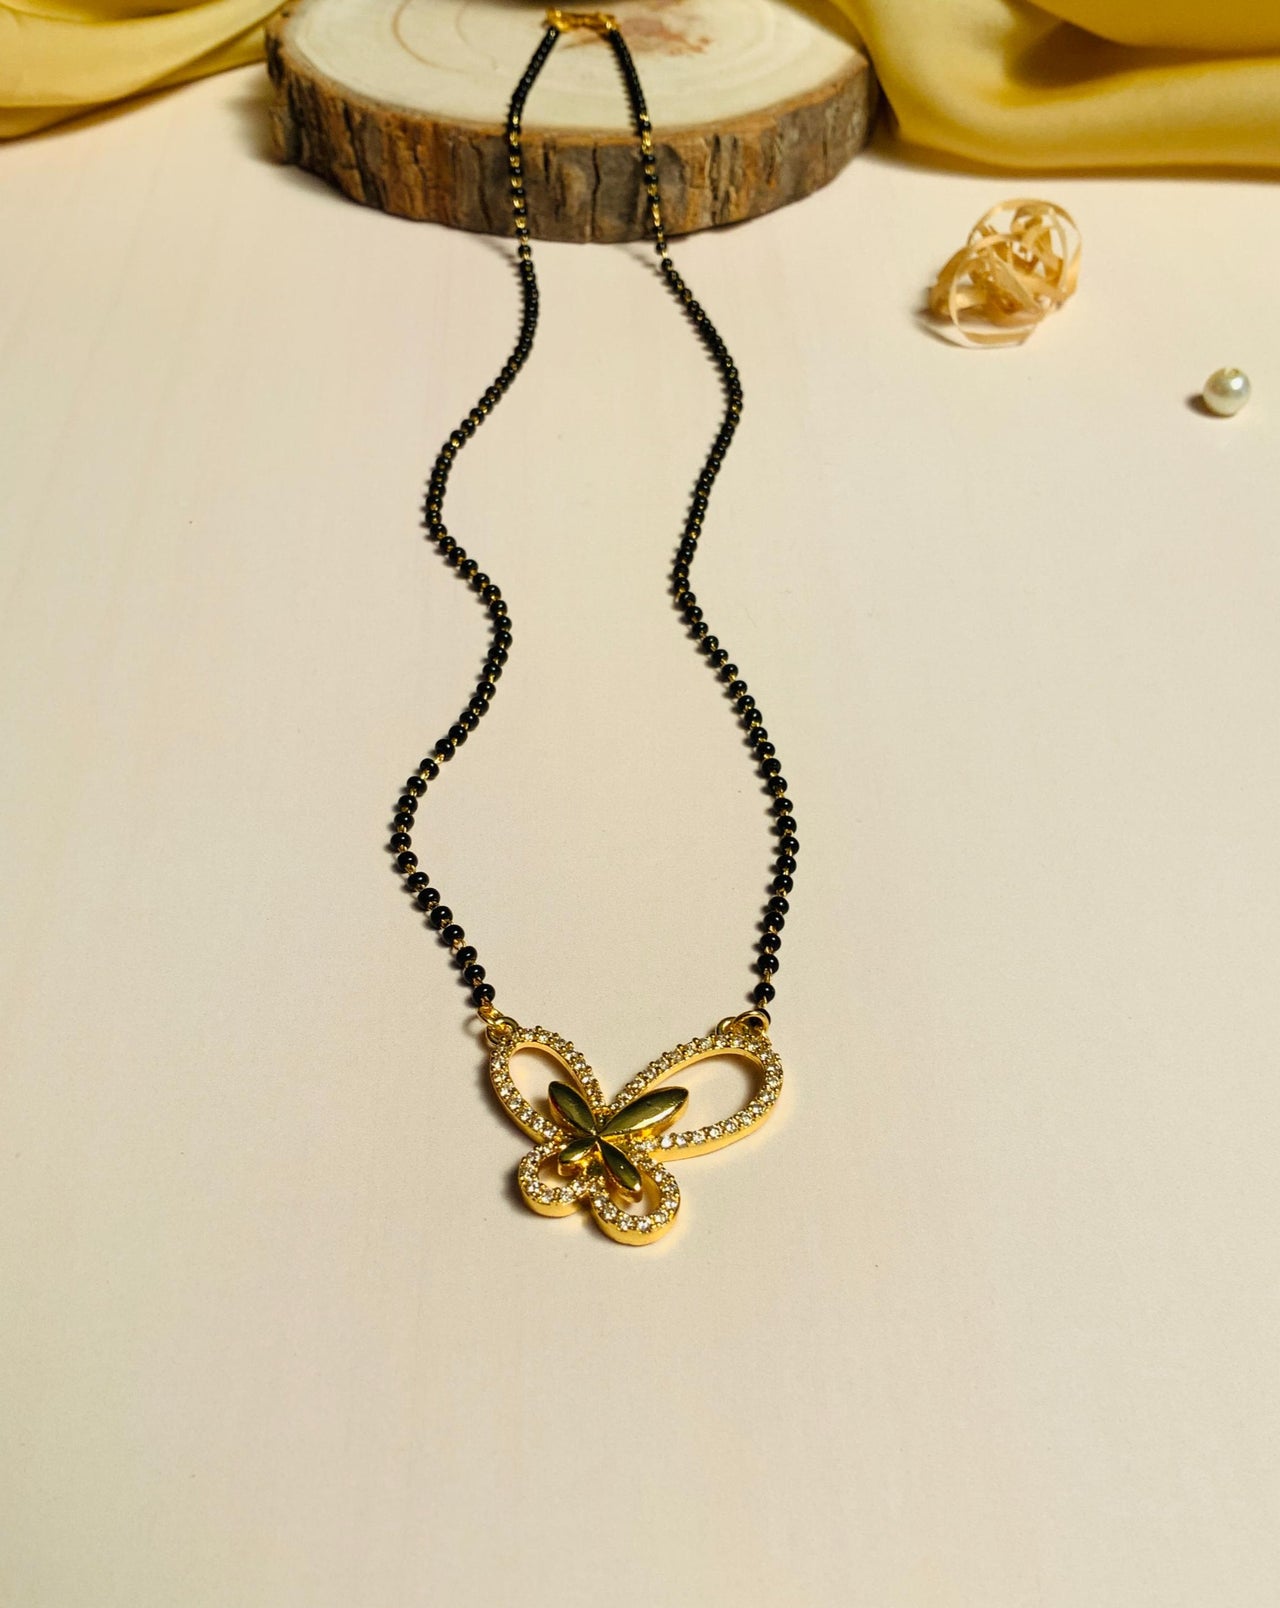 Alluring Butterfly Diamond Mangalsutra - Abdesignsjewellery